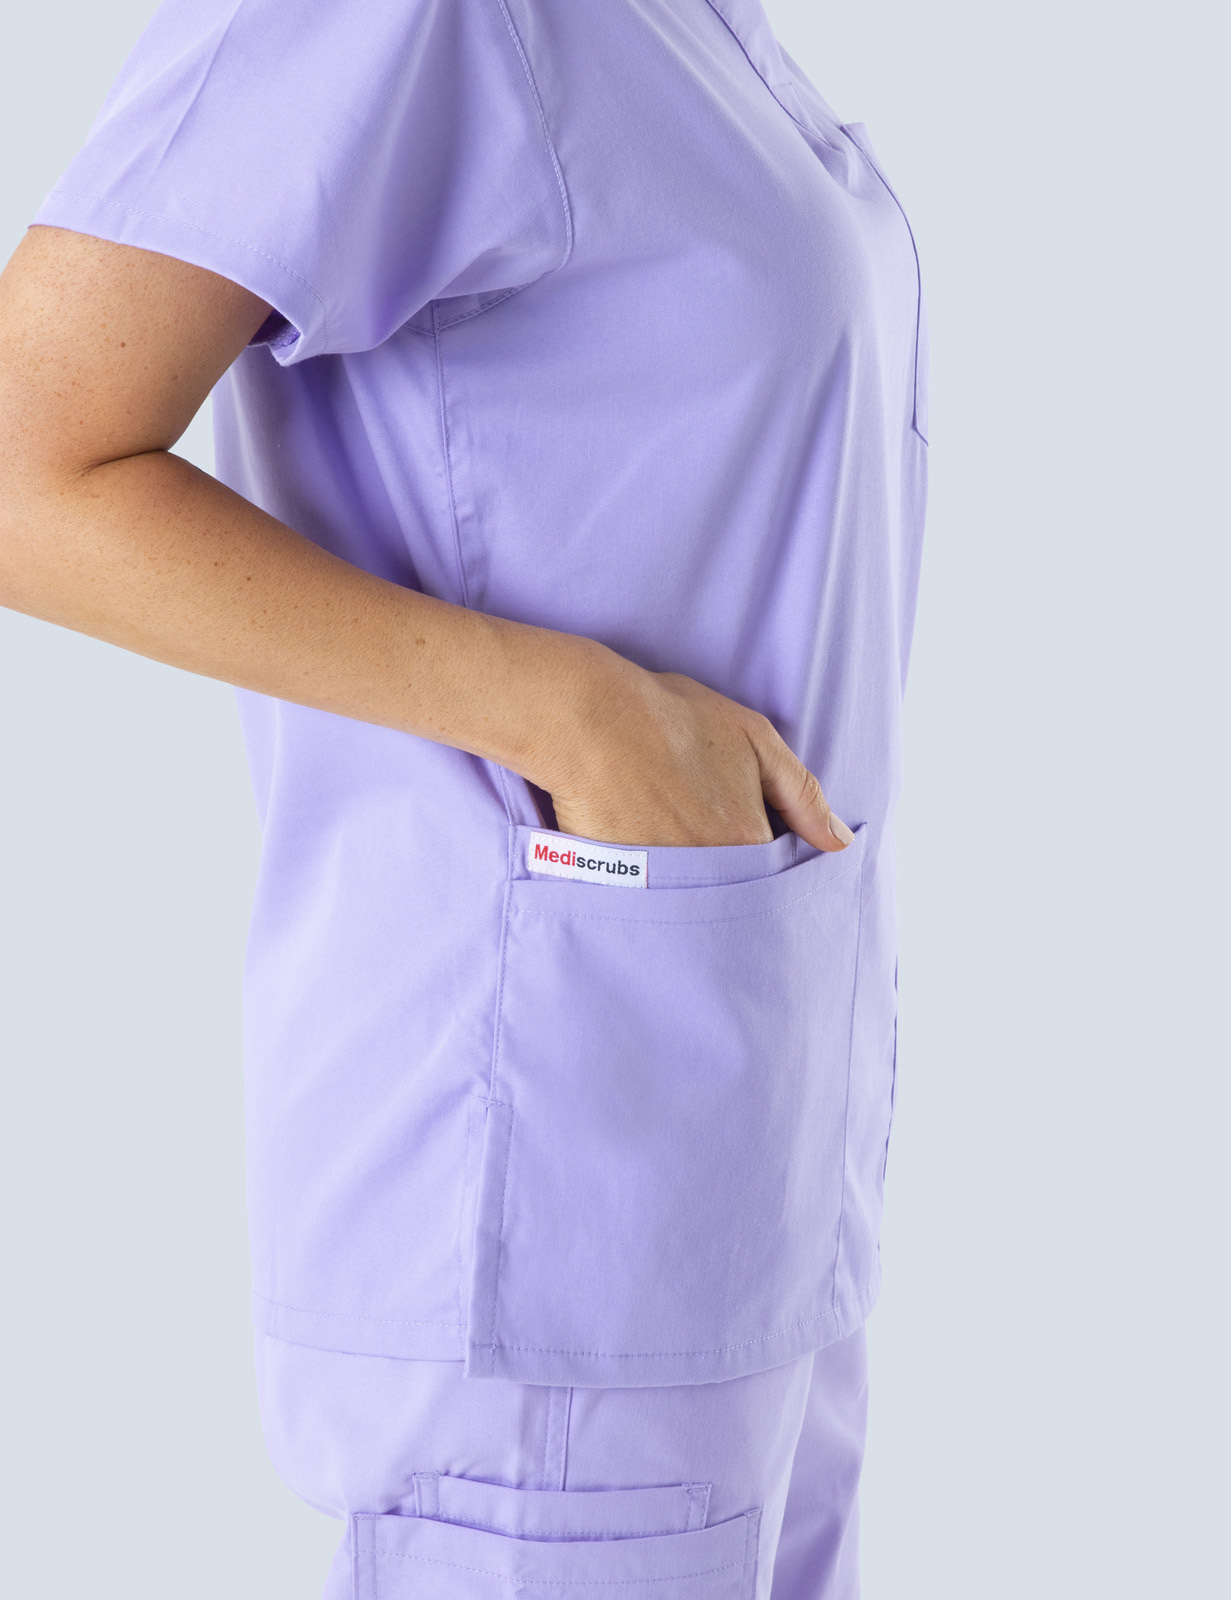 Queensland Children's Hospital Emergency Department Enrolled Nurse Uniform Top Bundle  (4 Pocket Top  in Lilac incl Logos)